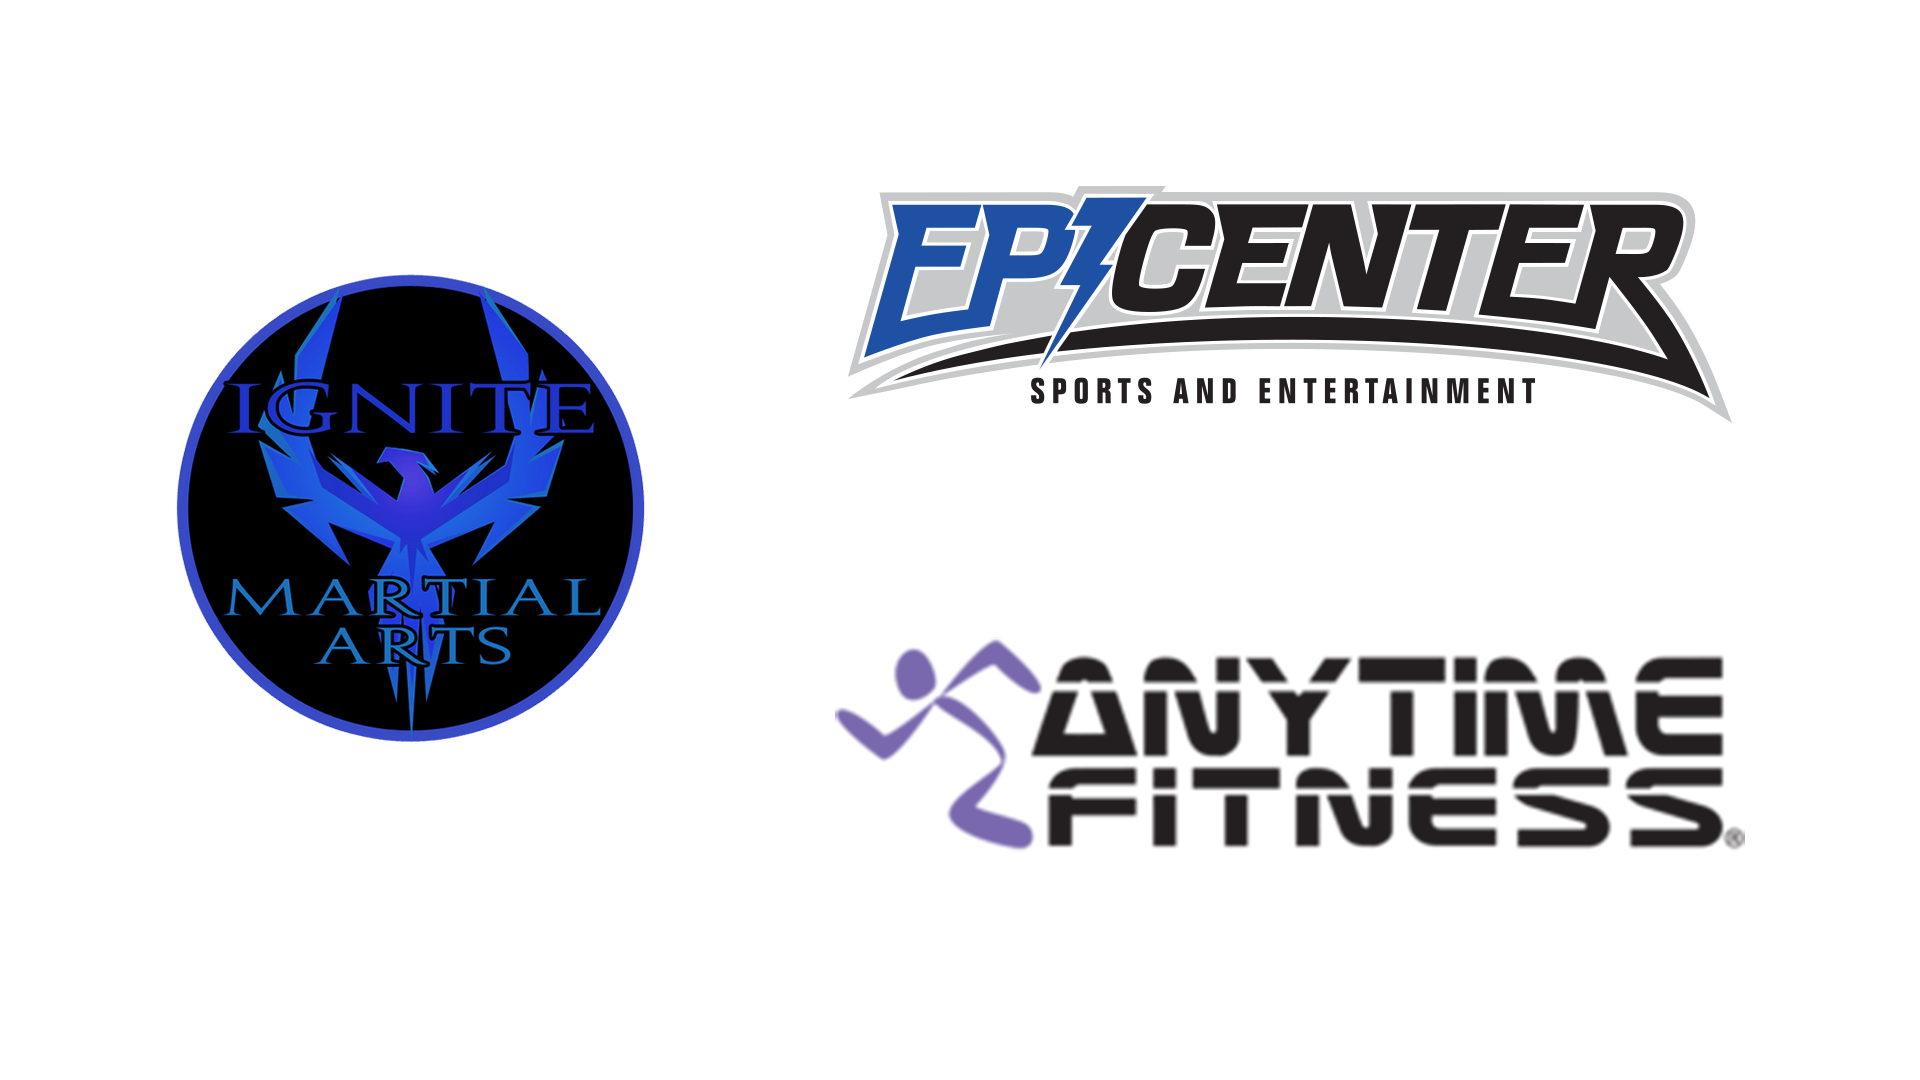 Anytime fitness epicenter ignite logos